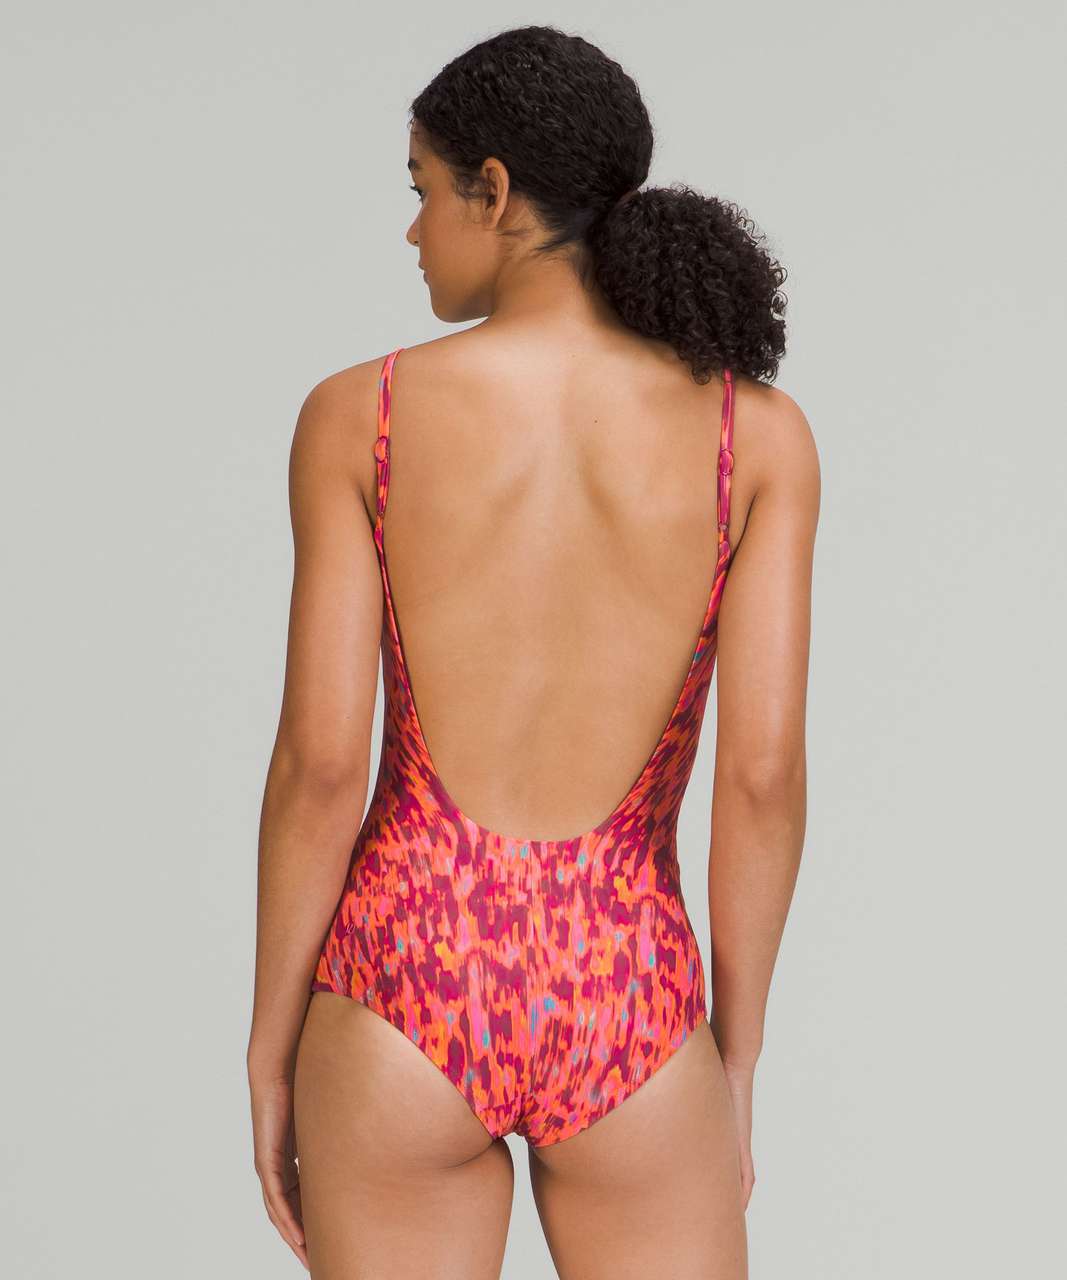 Lululemon Waterside One-Piece Swimsuit *B/C Cup, Medium Bum Coverage - Harmonize Fluro Pink Multi